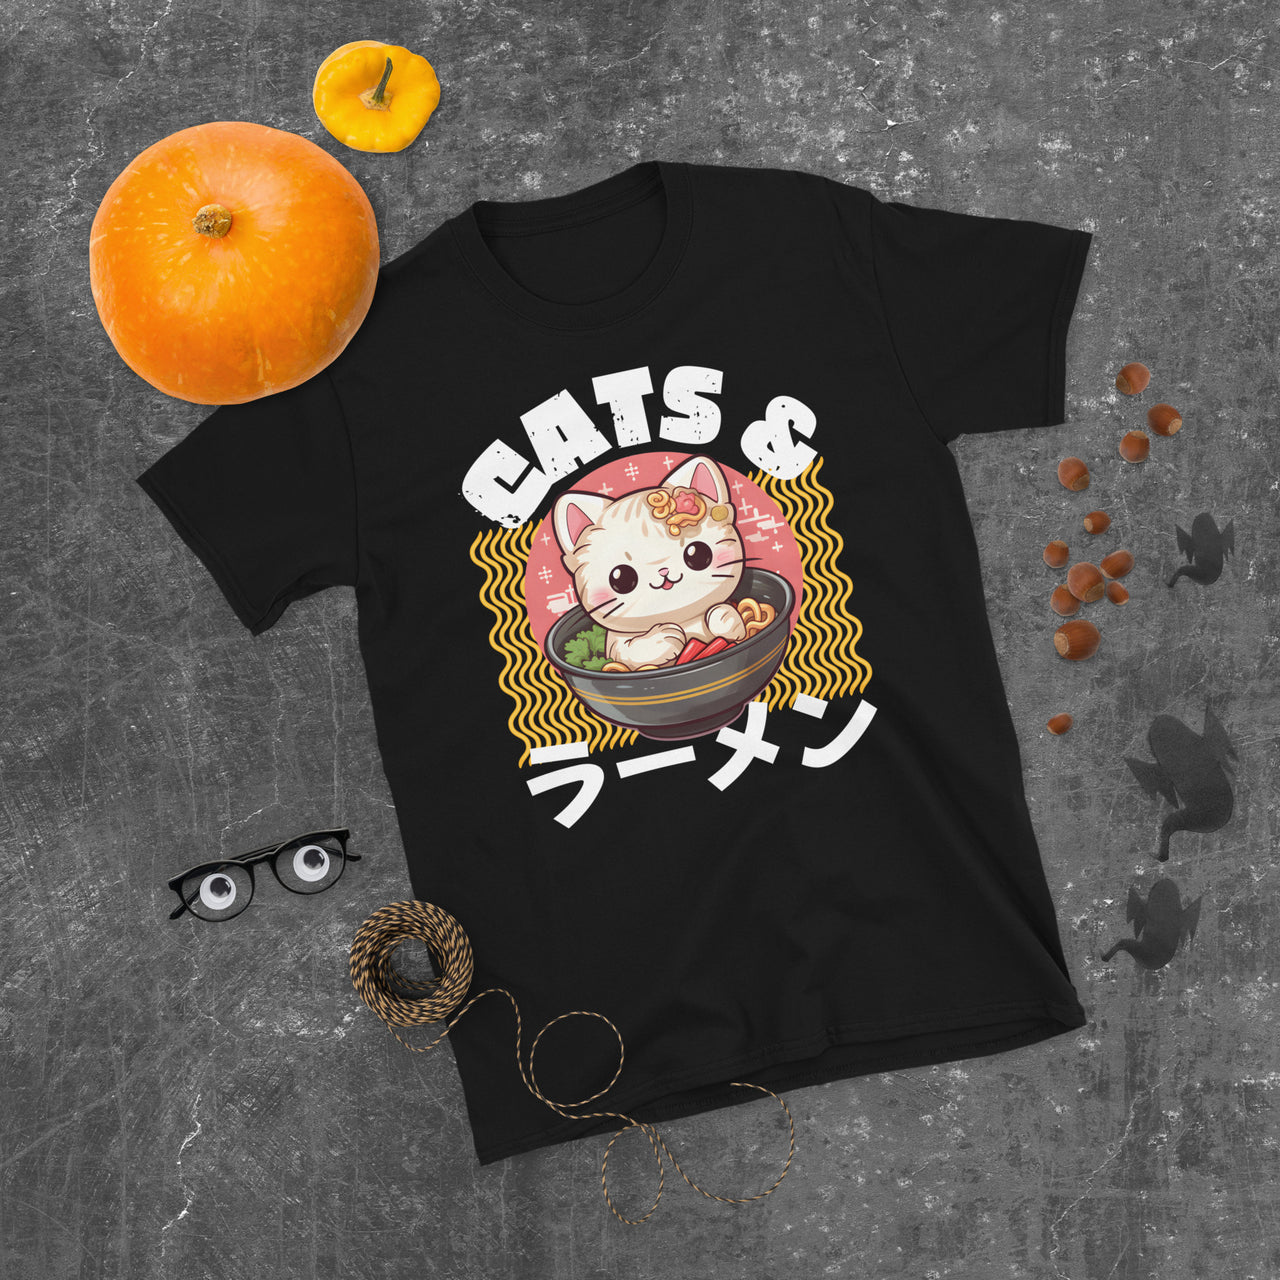 Cats and Ramen Japanese Aesthetic Kawaii T-Shirt